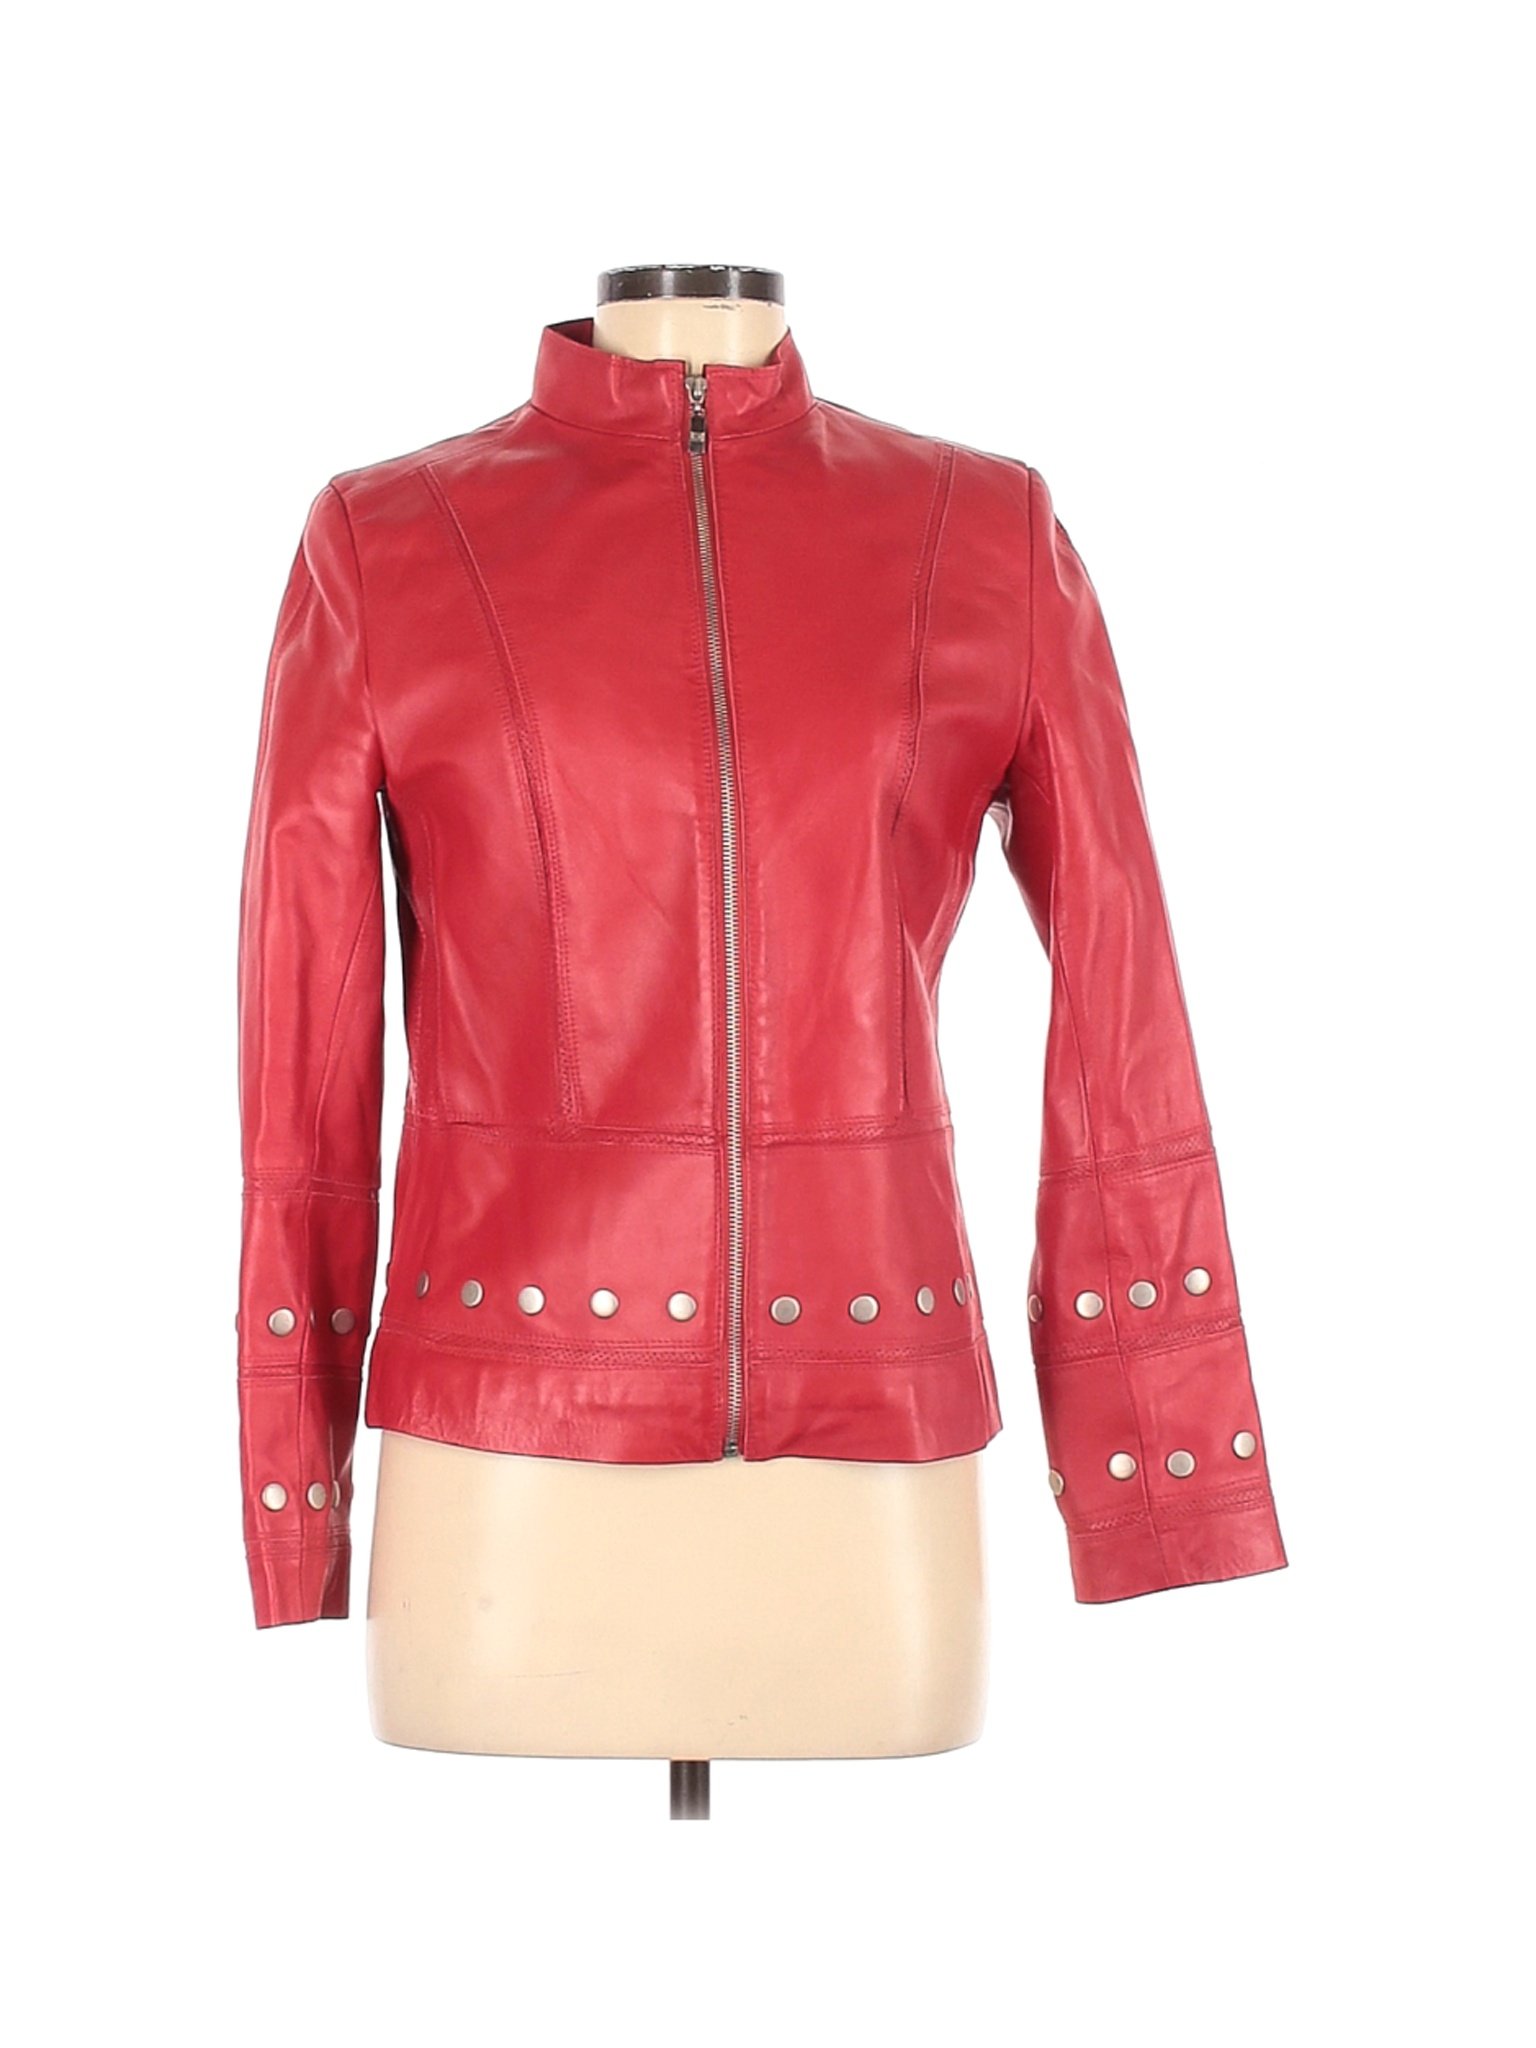 Pamela McCoy Women Red Leather Jacket XS | eBay